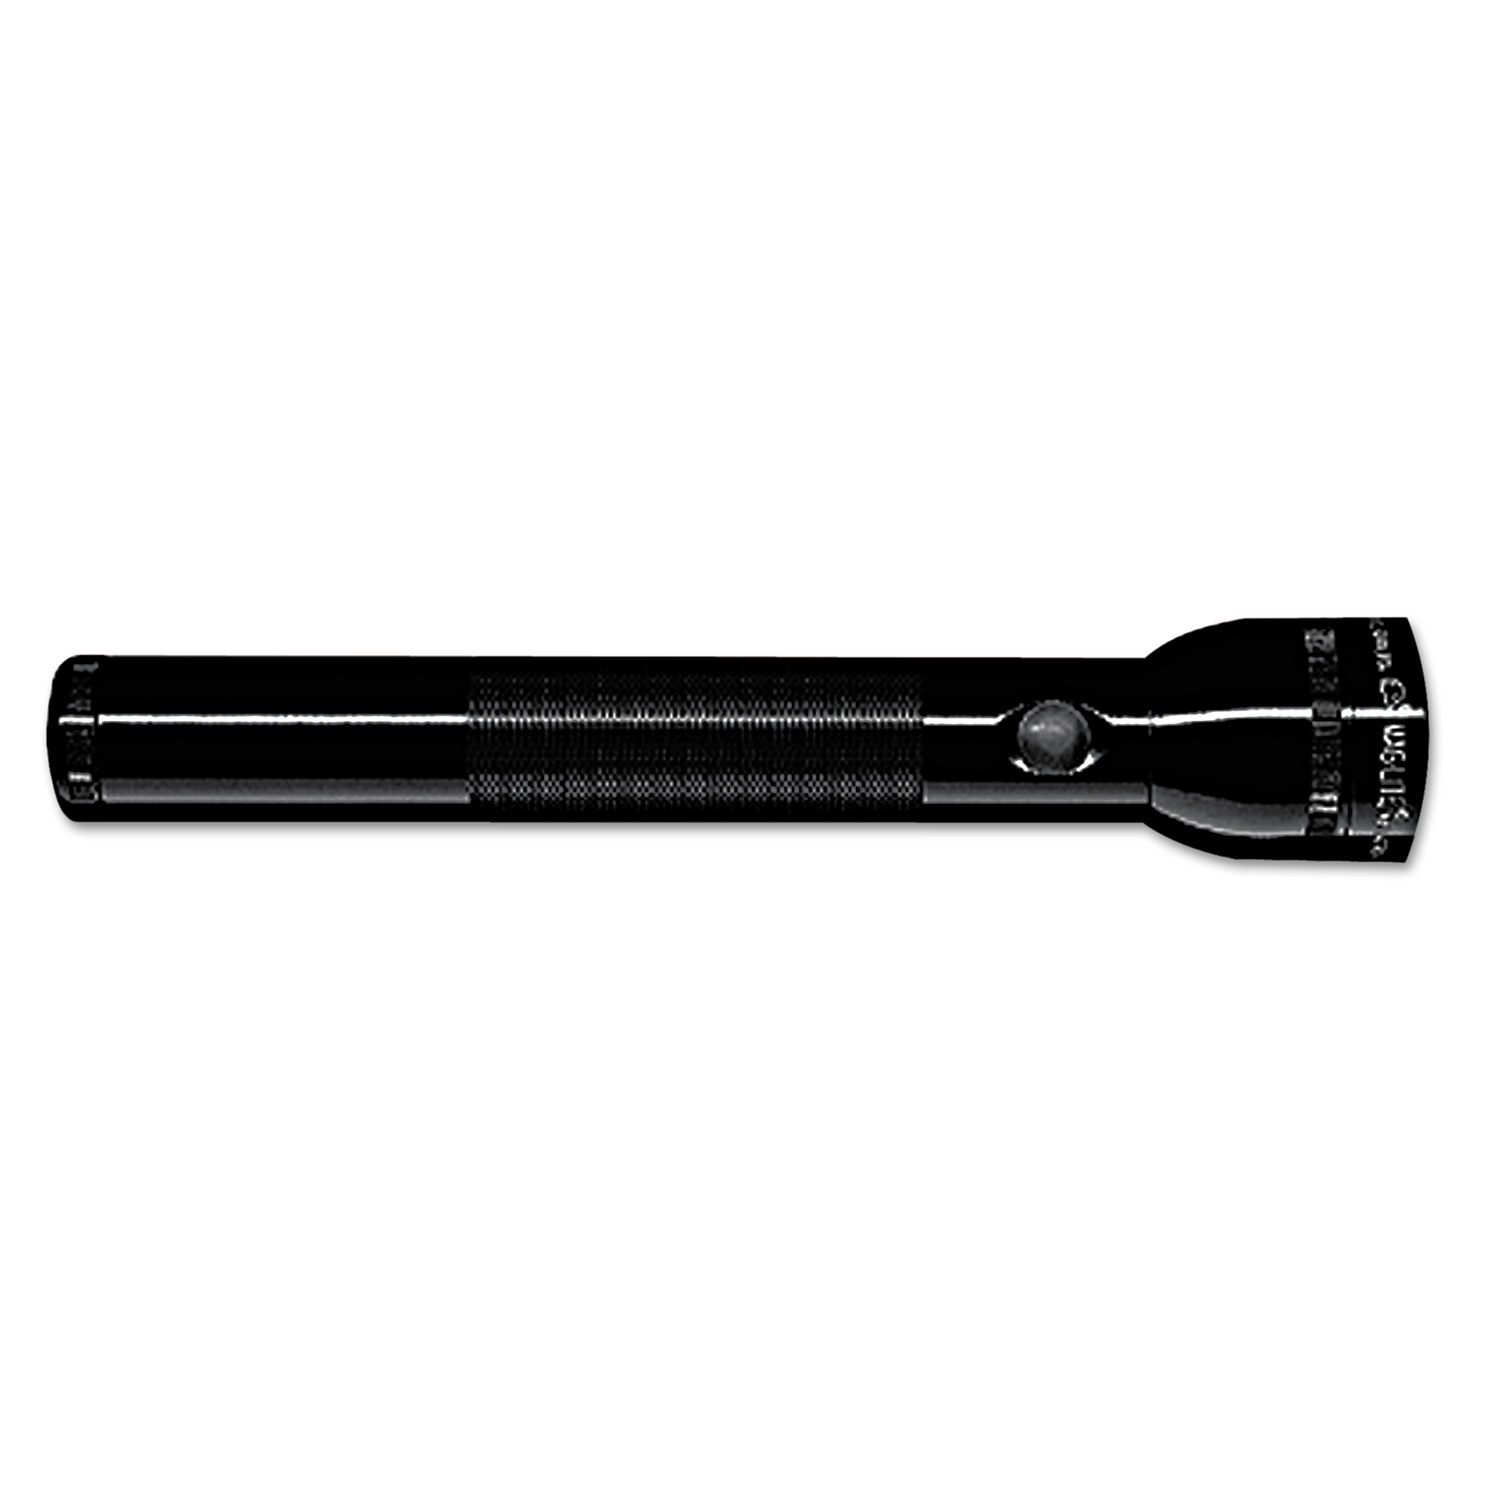  Maglite S2D016 Standard Flashlight, 2 D Batteries (Sold Separately), Black (MGLS2D016) 